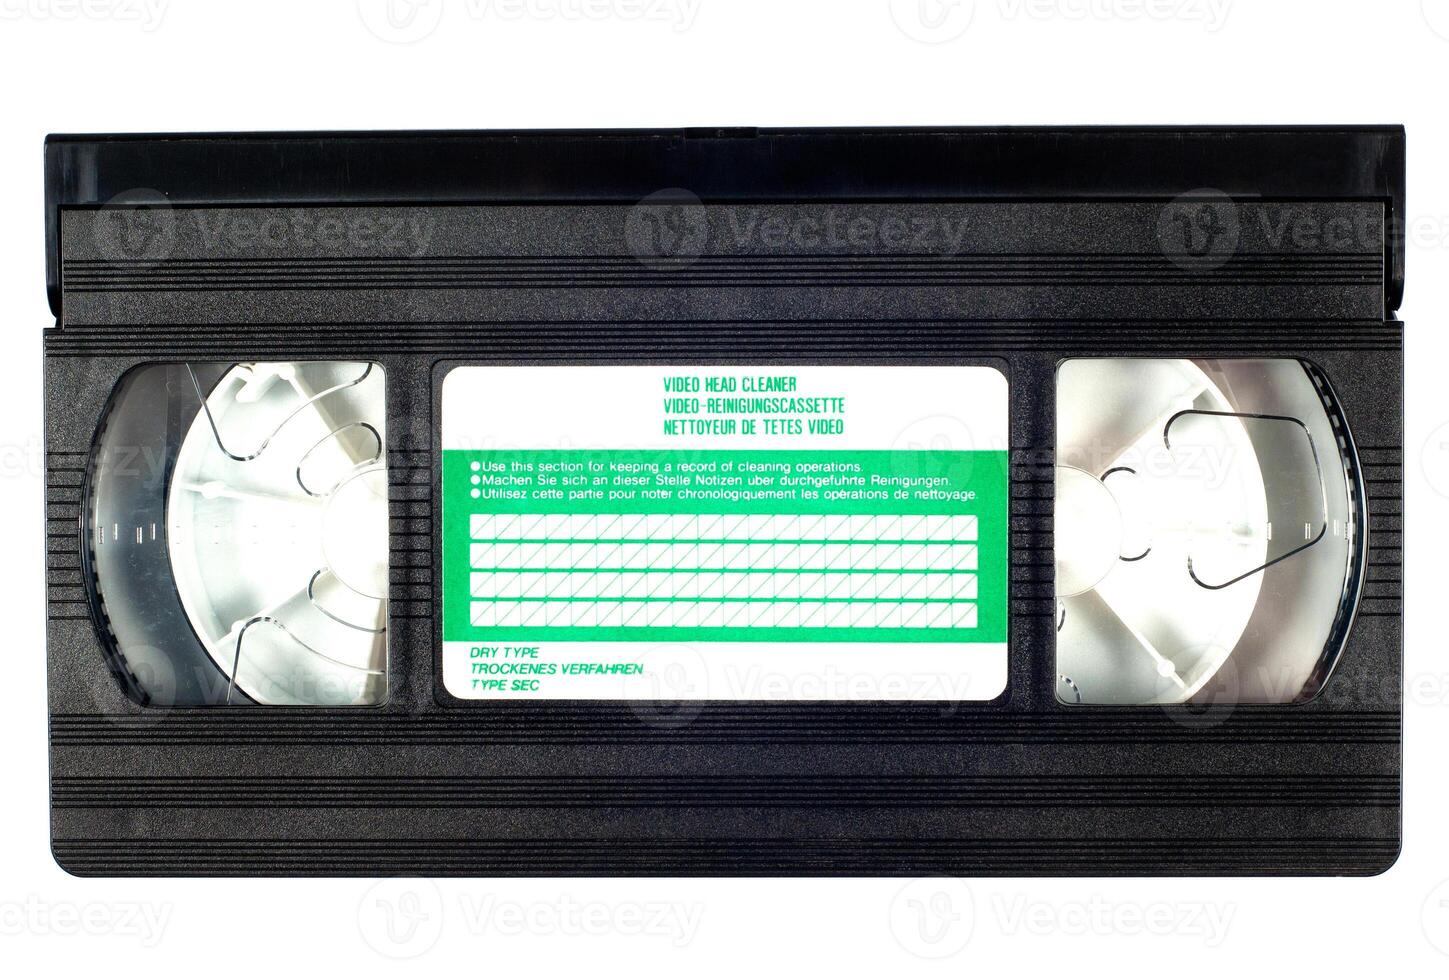 A Video cassette photo